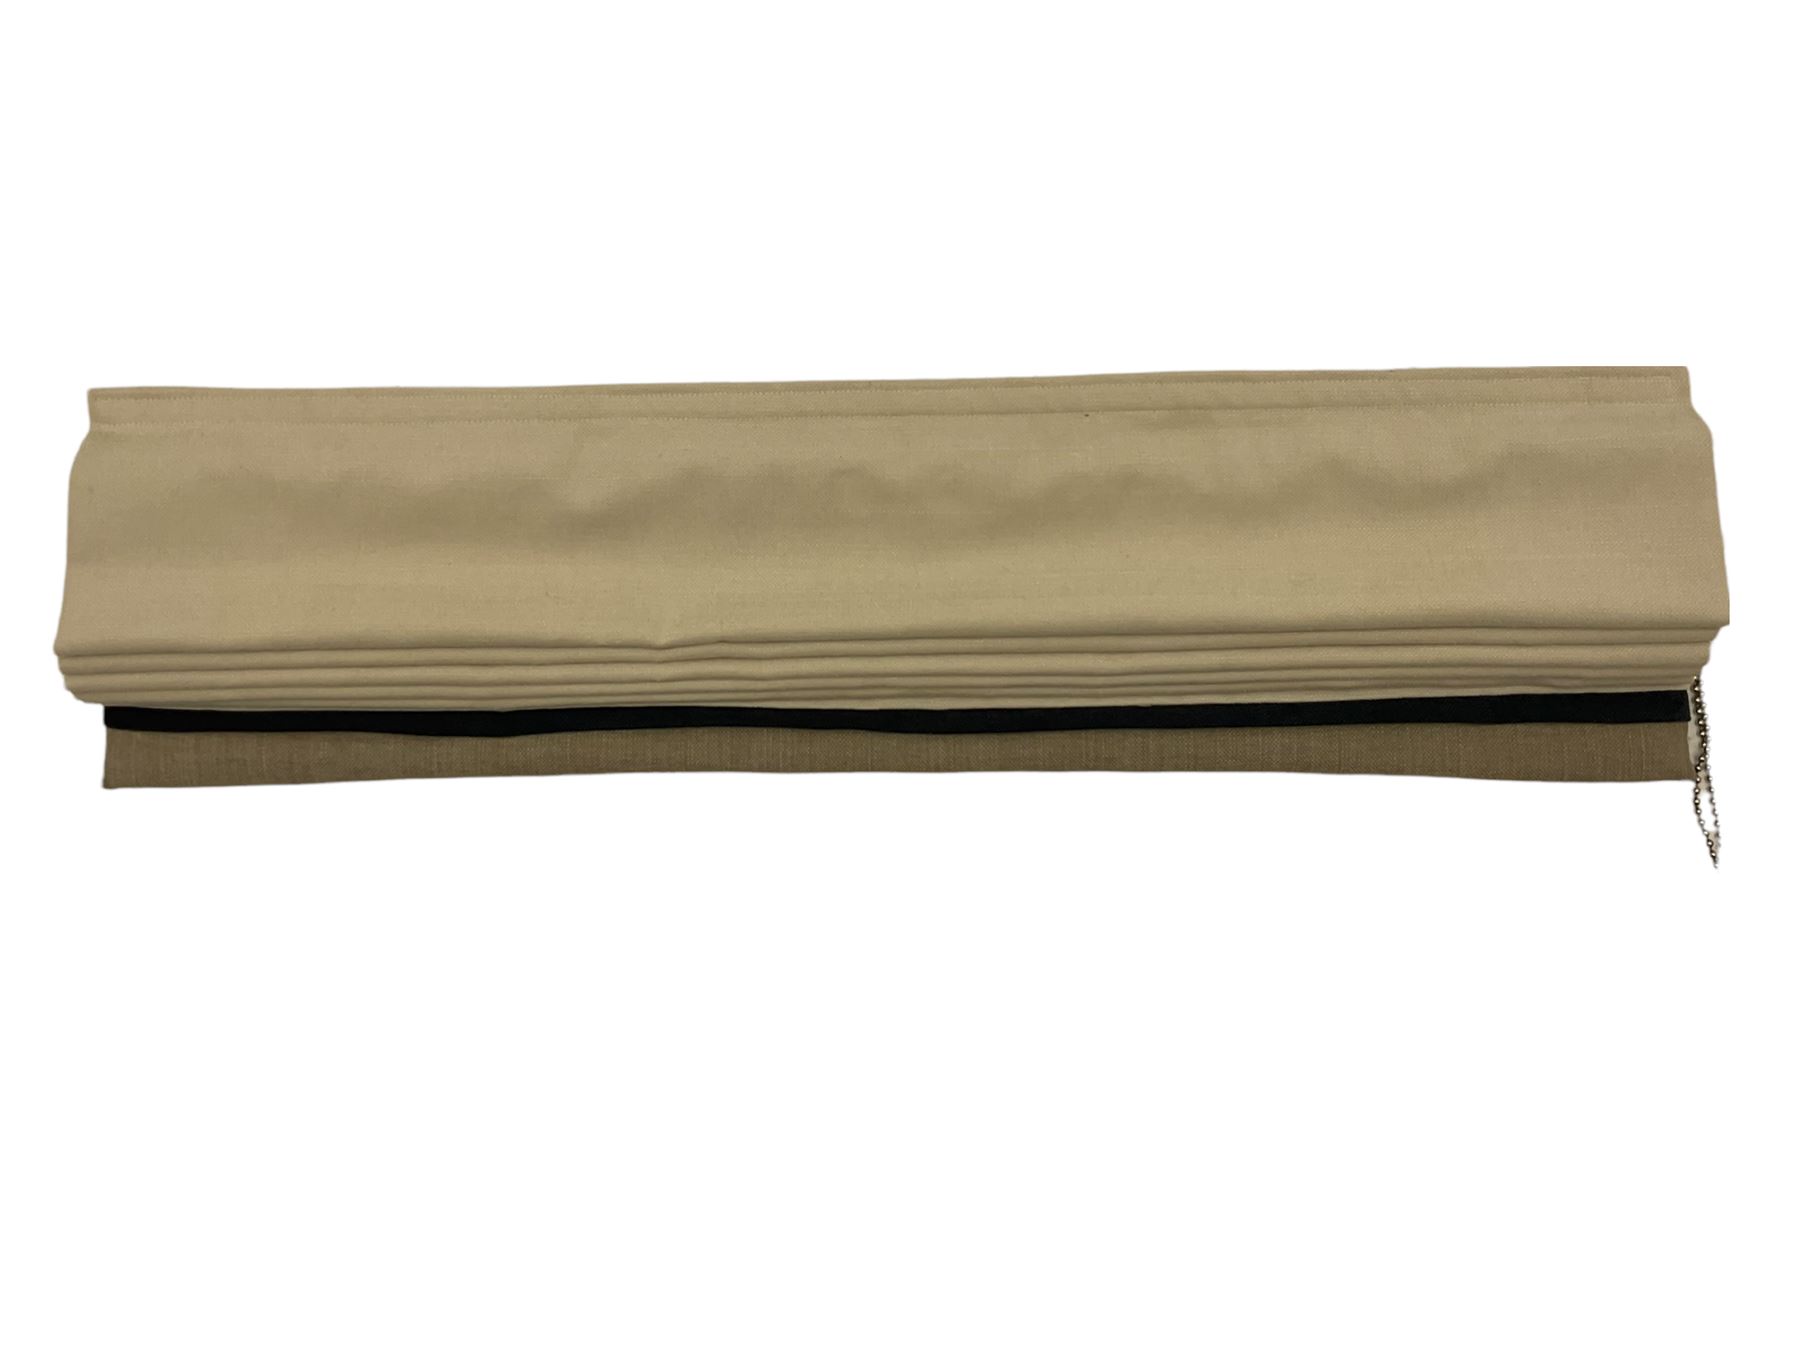 Roman blind upholstered in beige linen fabric - Image 2 of 2